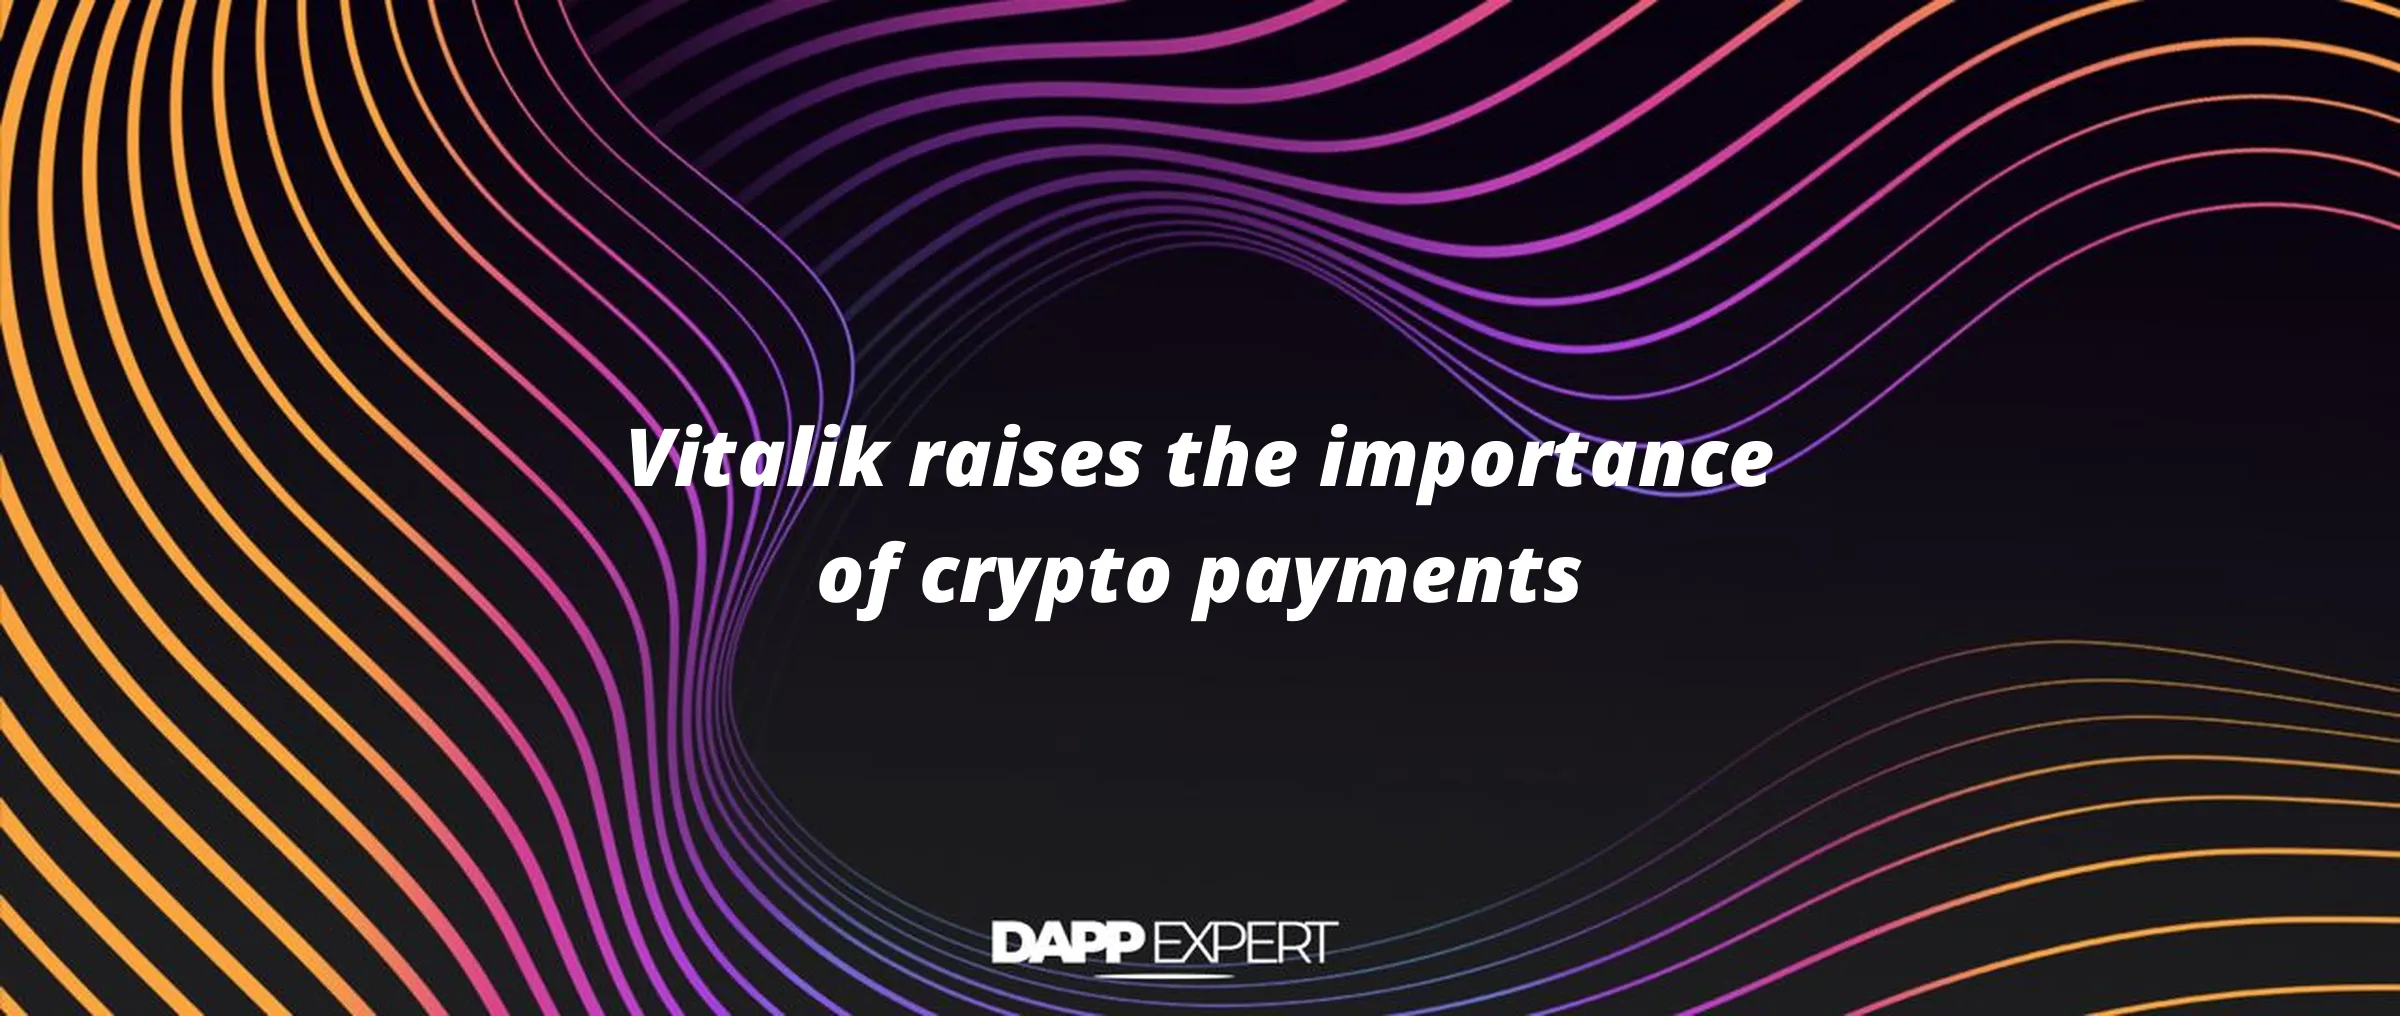 Vitalik raises the importance of crypto payments